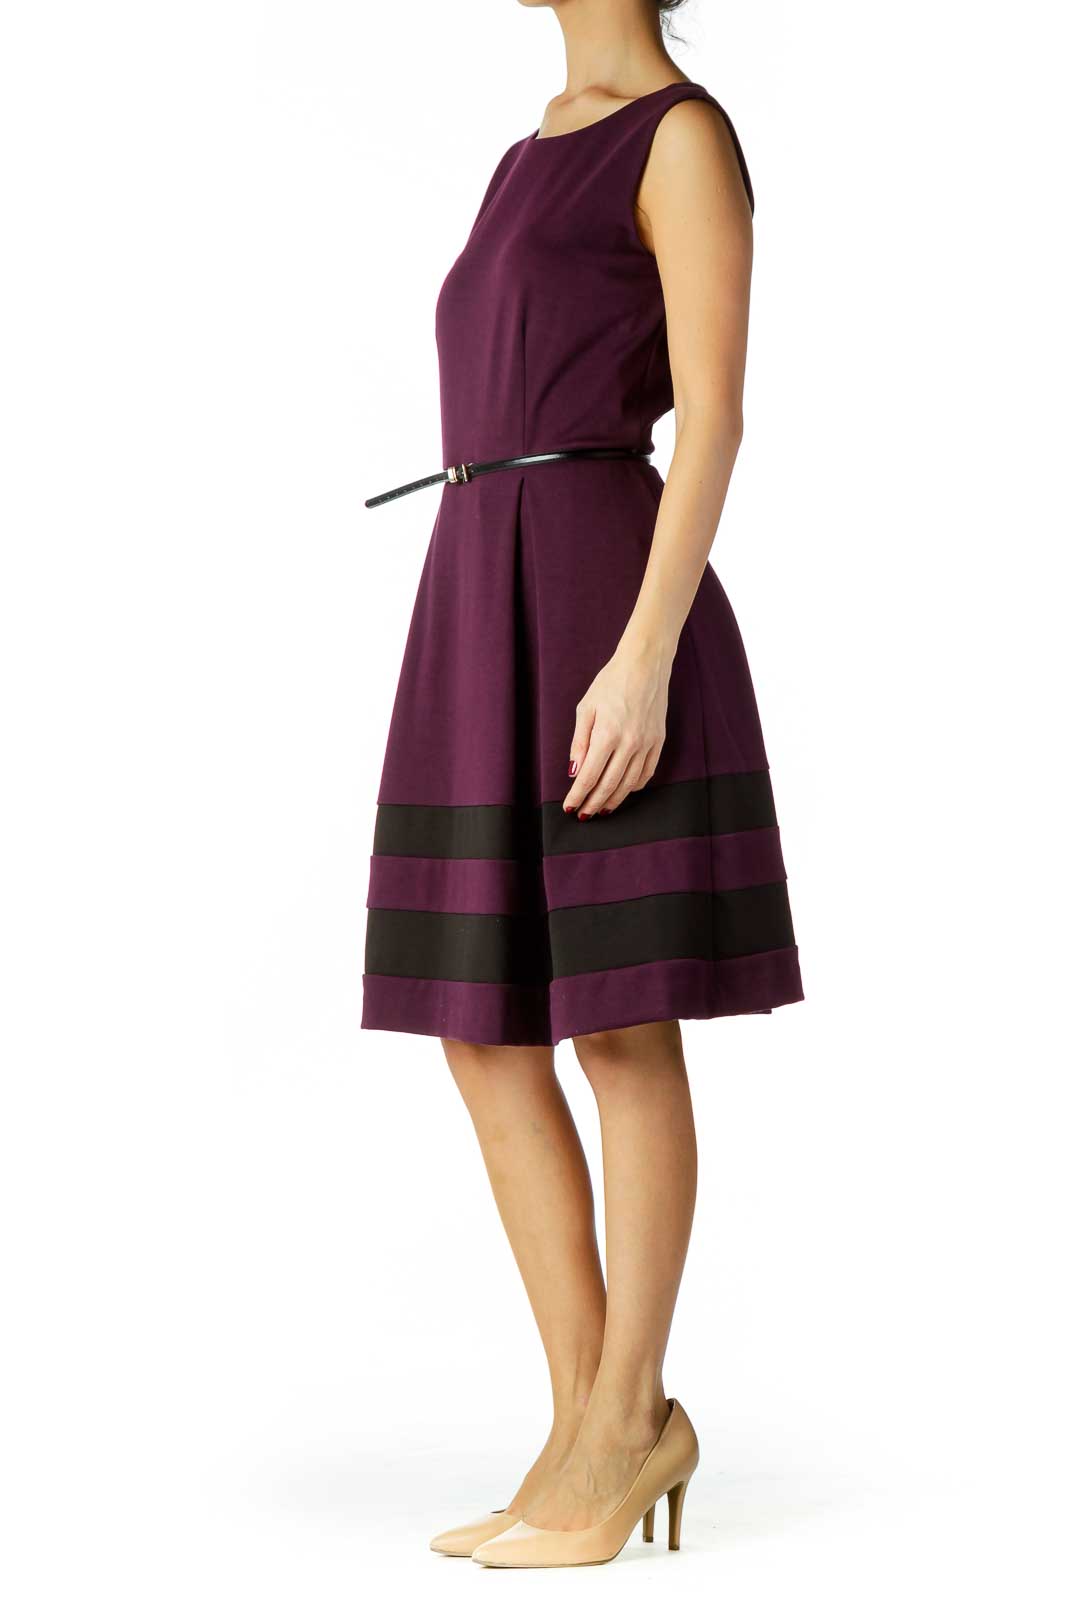 Calvin Klein - Purple Black Belted Dress Spandex Rayon Polyester | SilkRoll